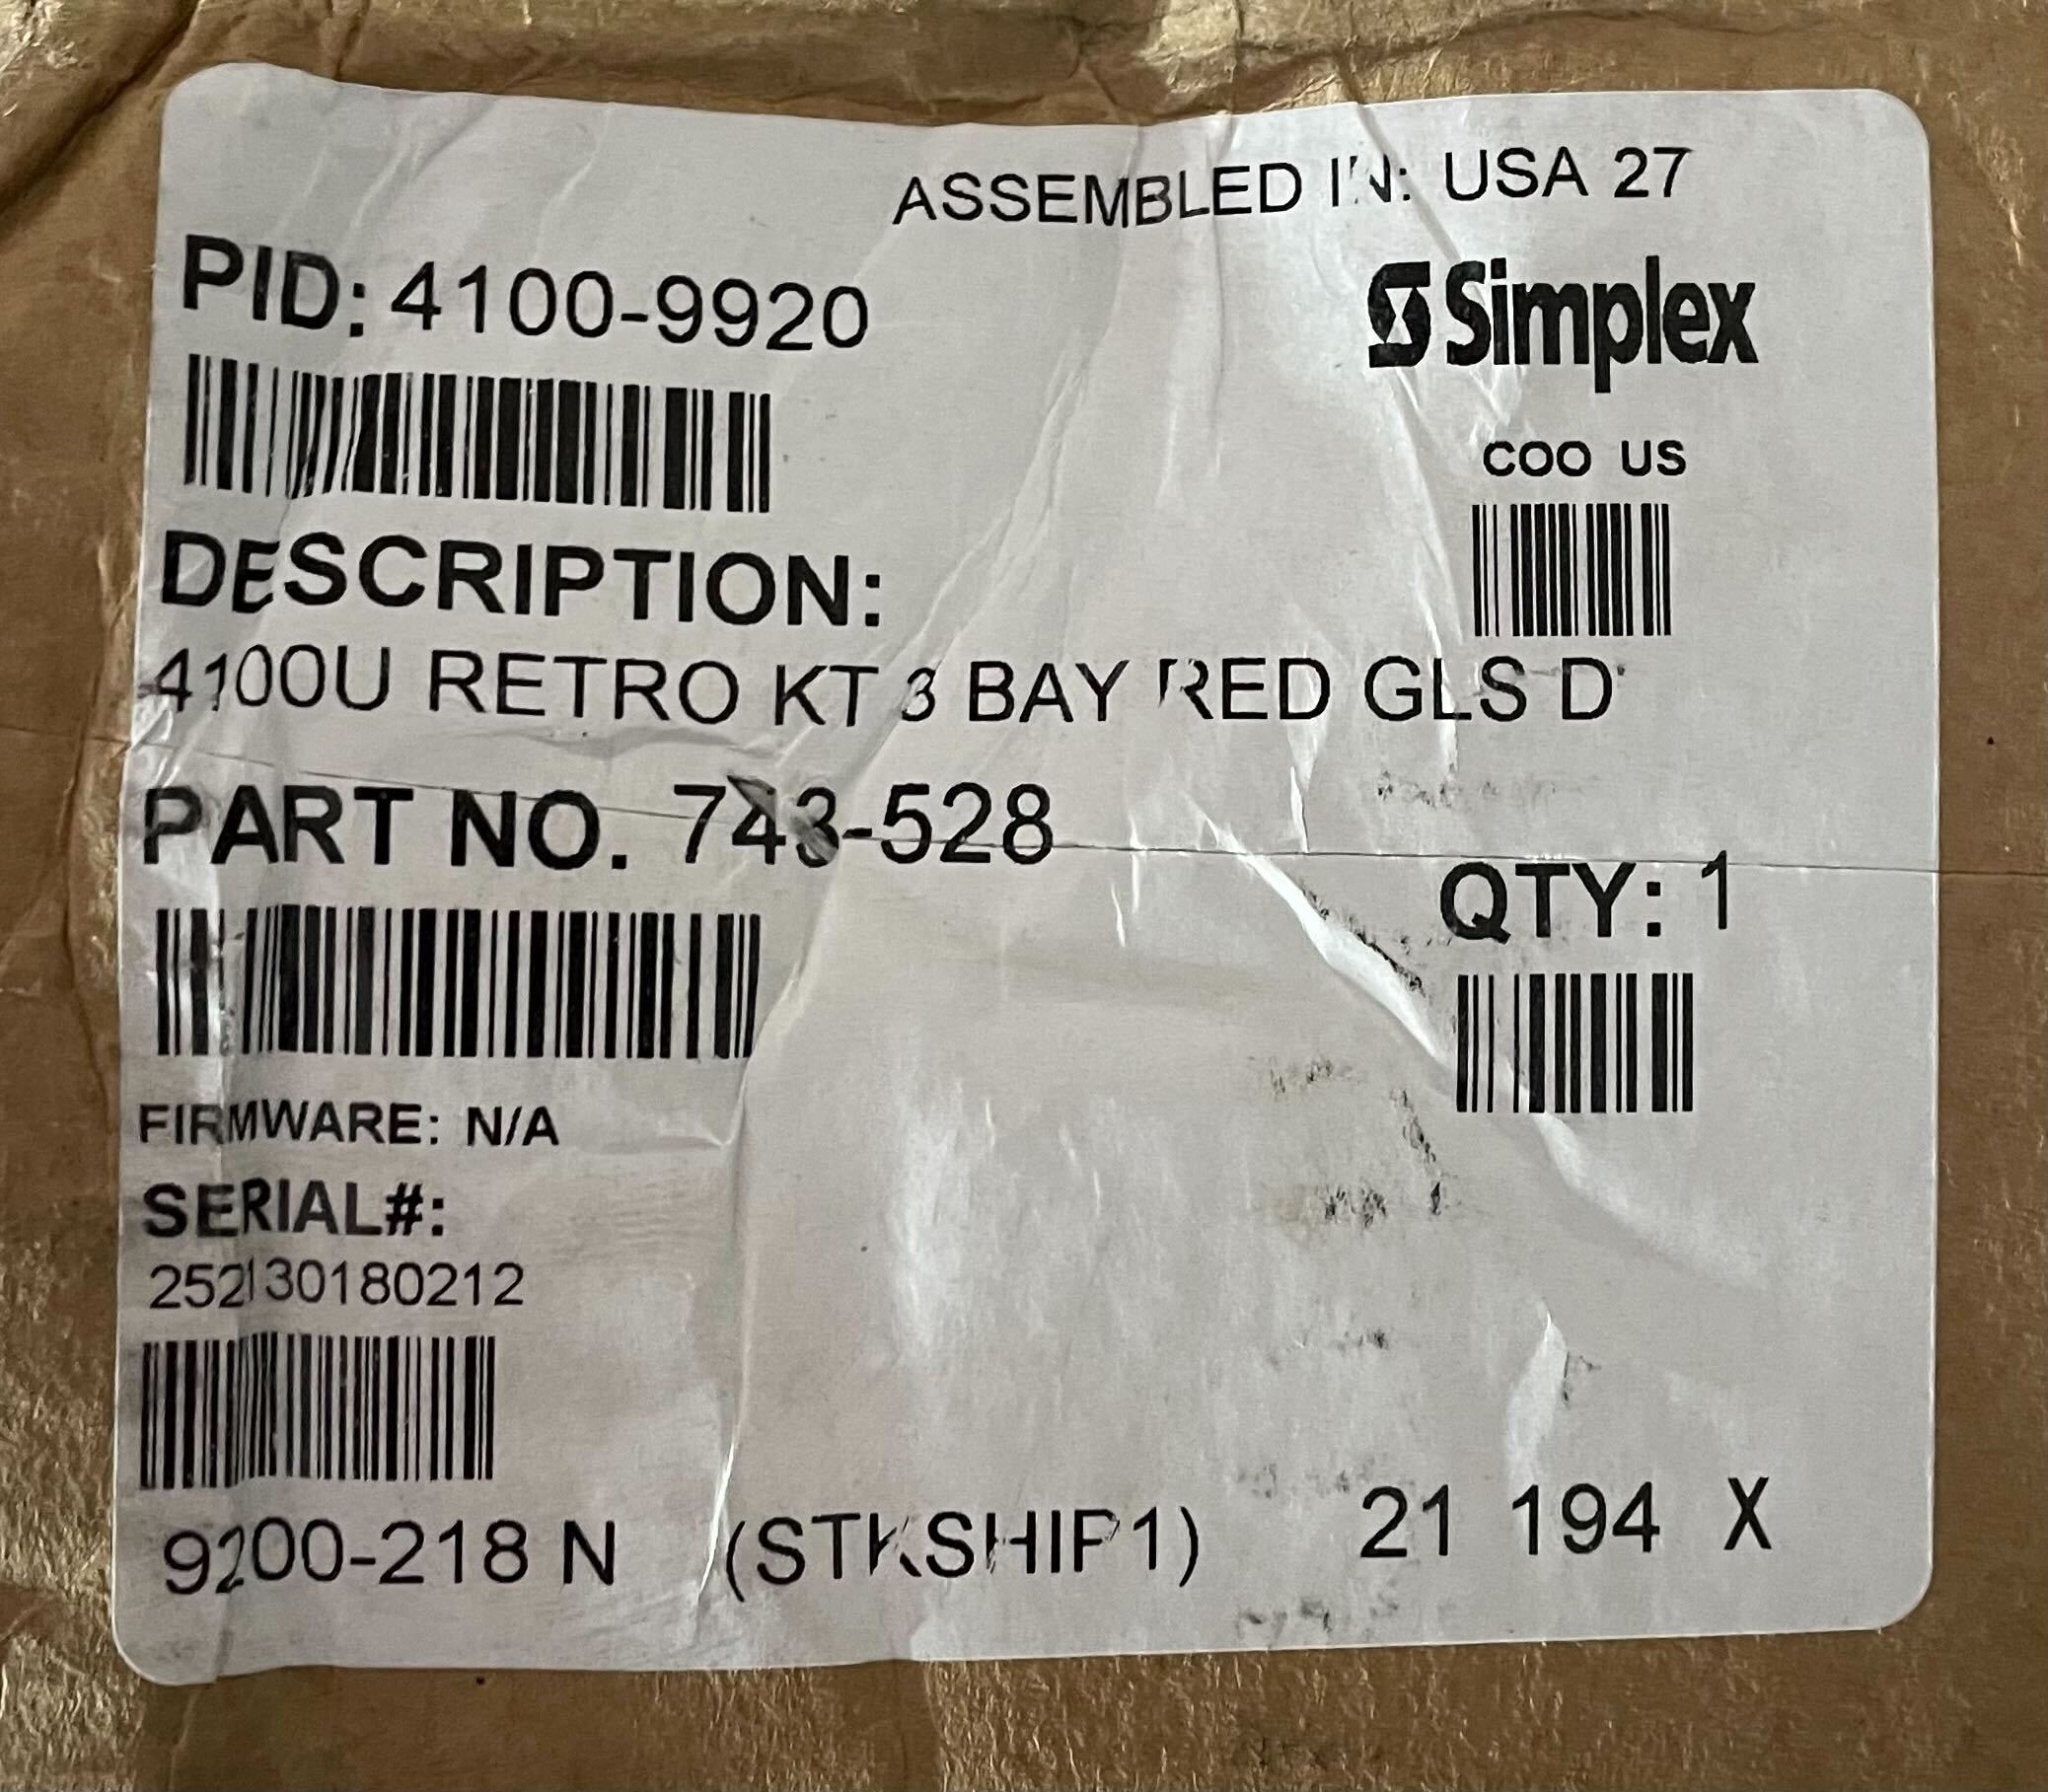 Simplex 4100-9920 - The Fire Alarm Supplier